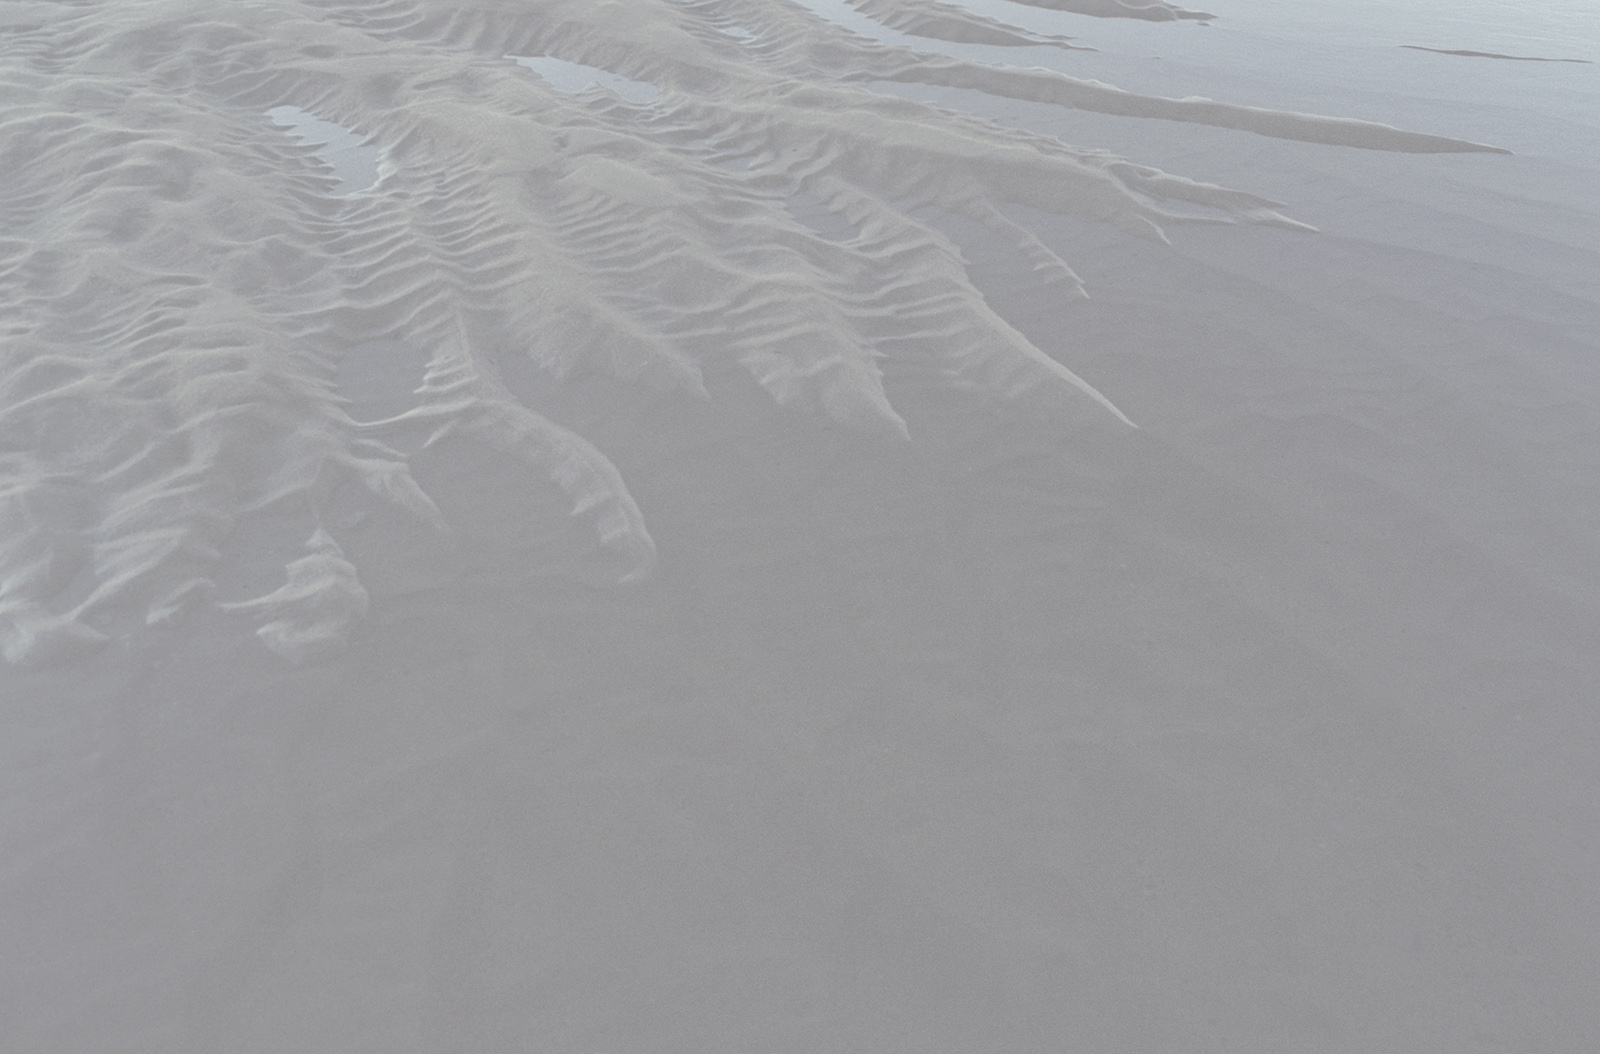 an image of waves by Namiko Kitaura